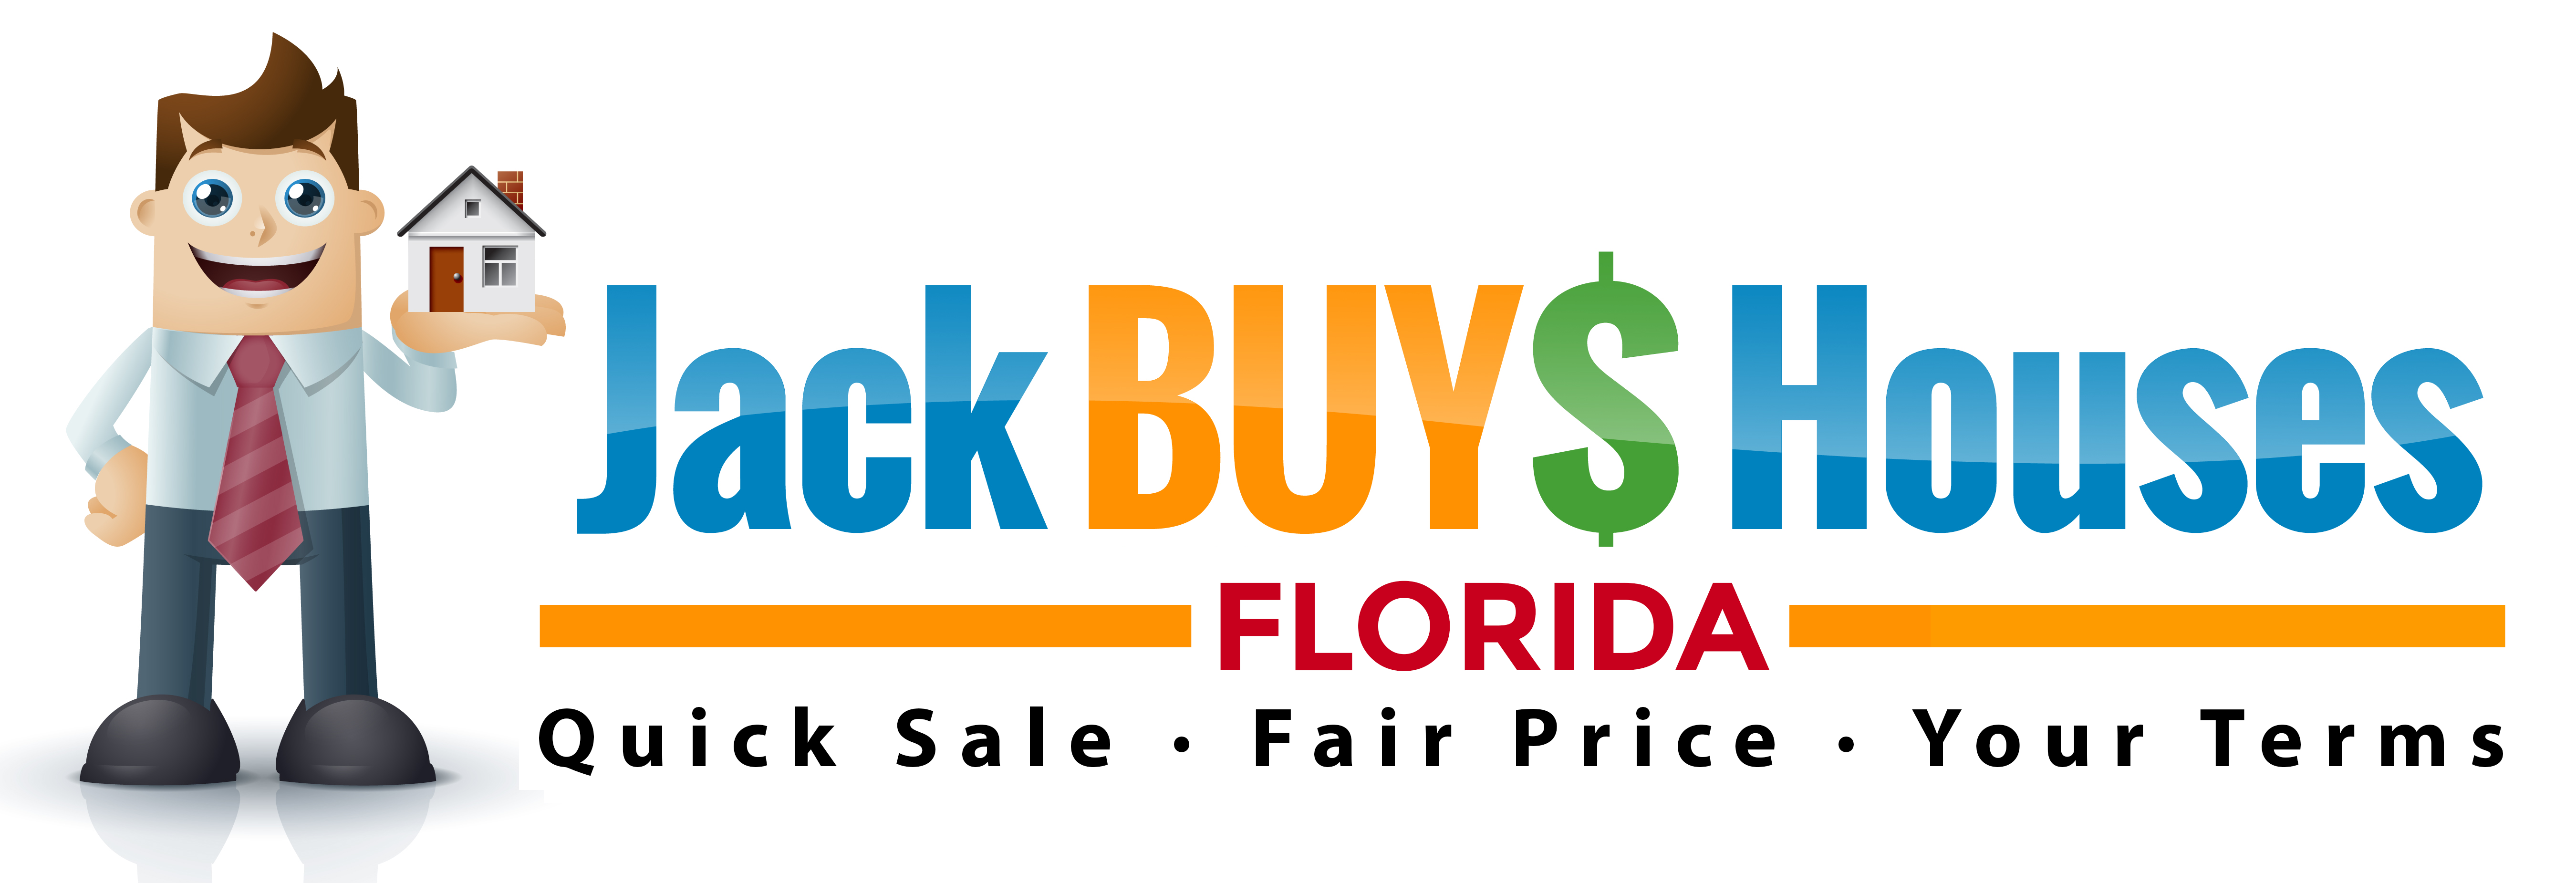 Jack BUYS Houses, LLC. logo